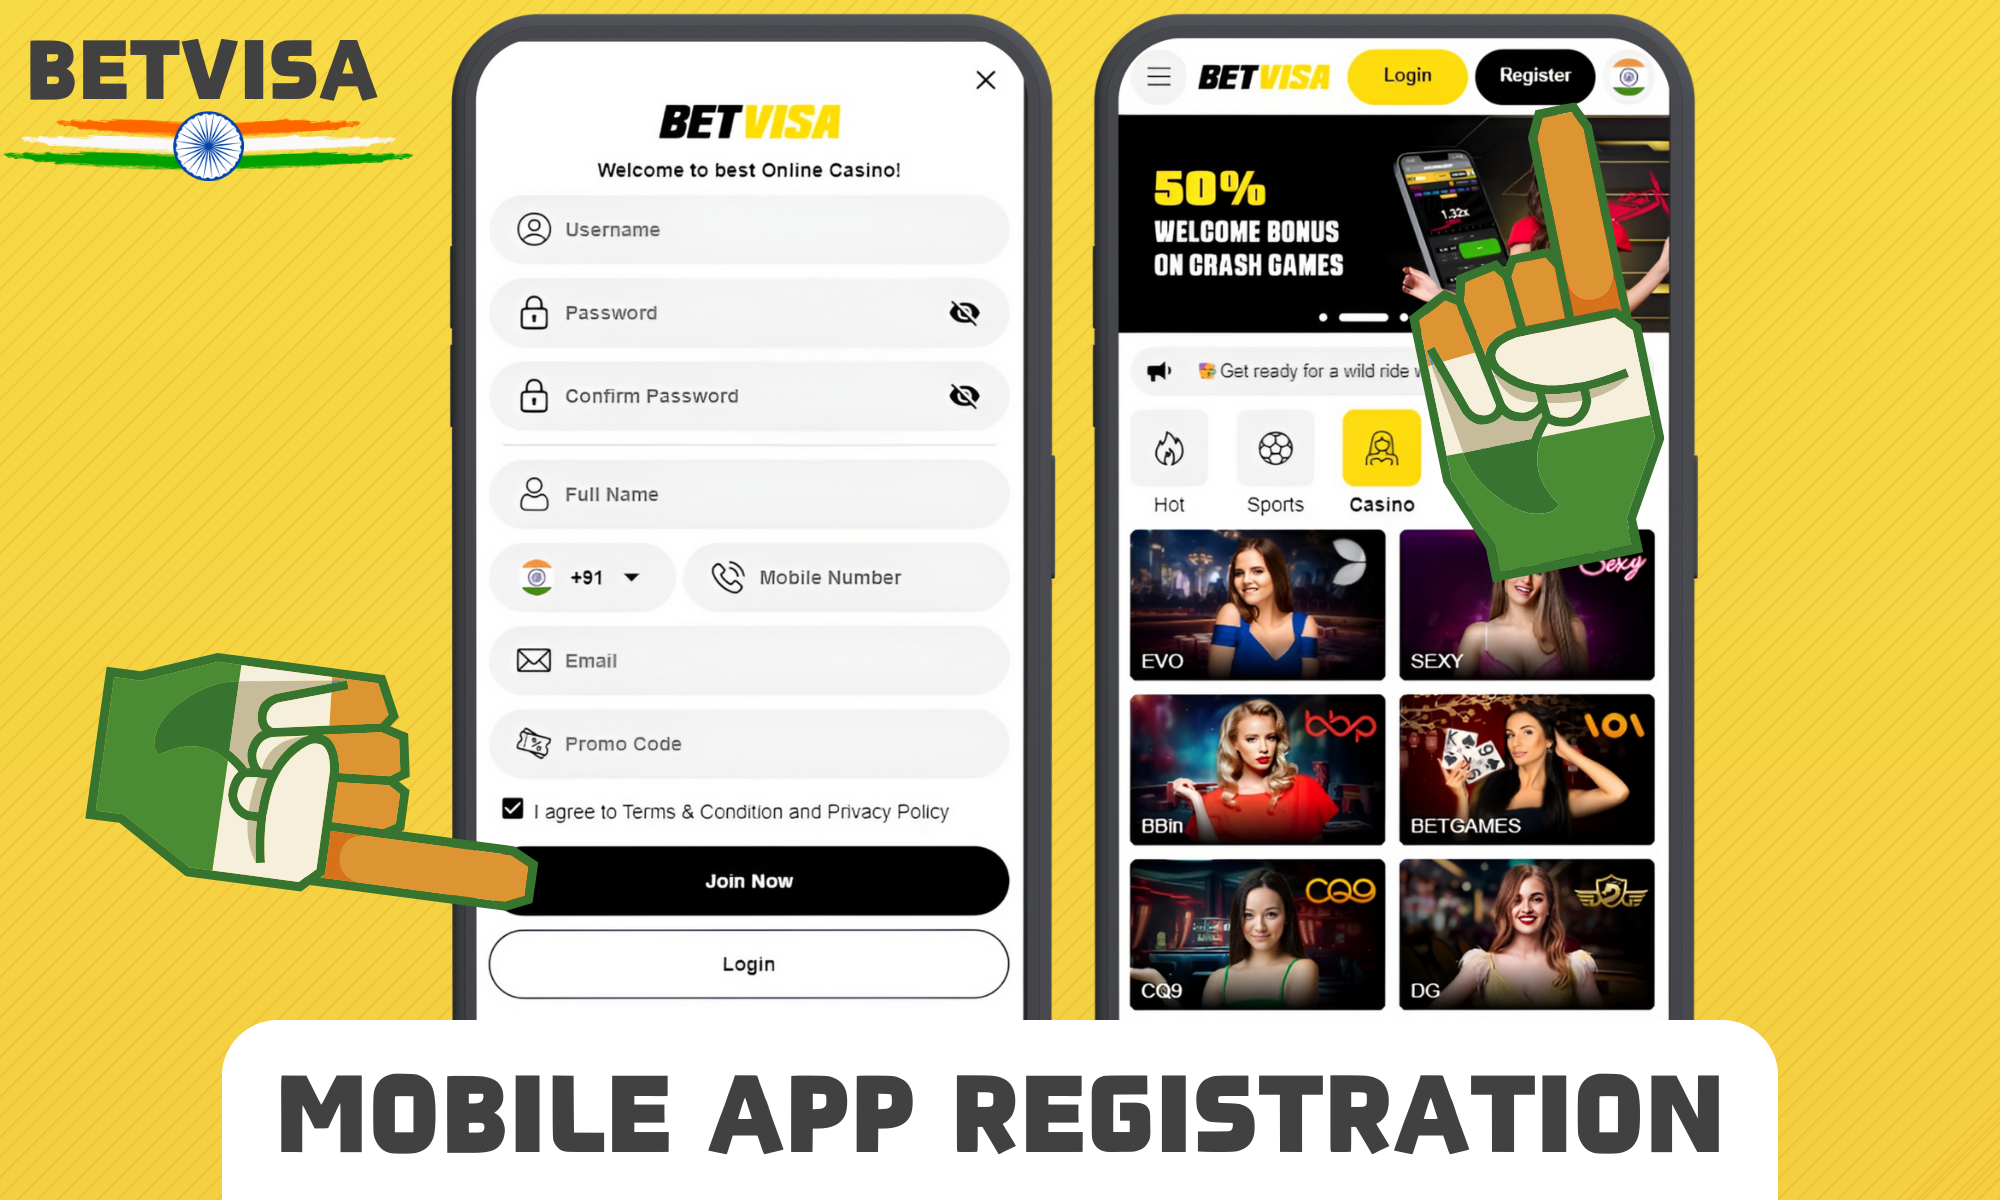 Registration through the Betvisa mobile application